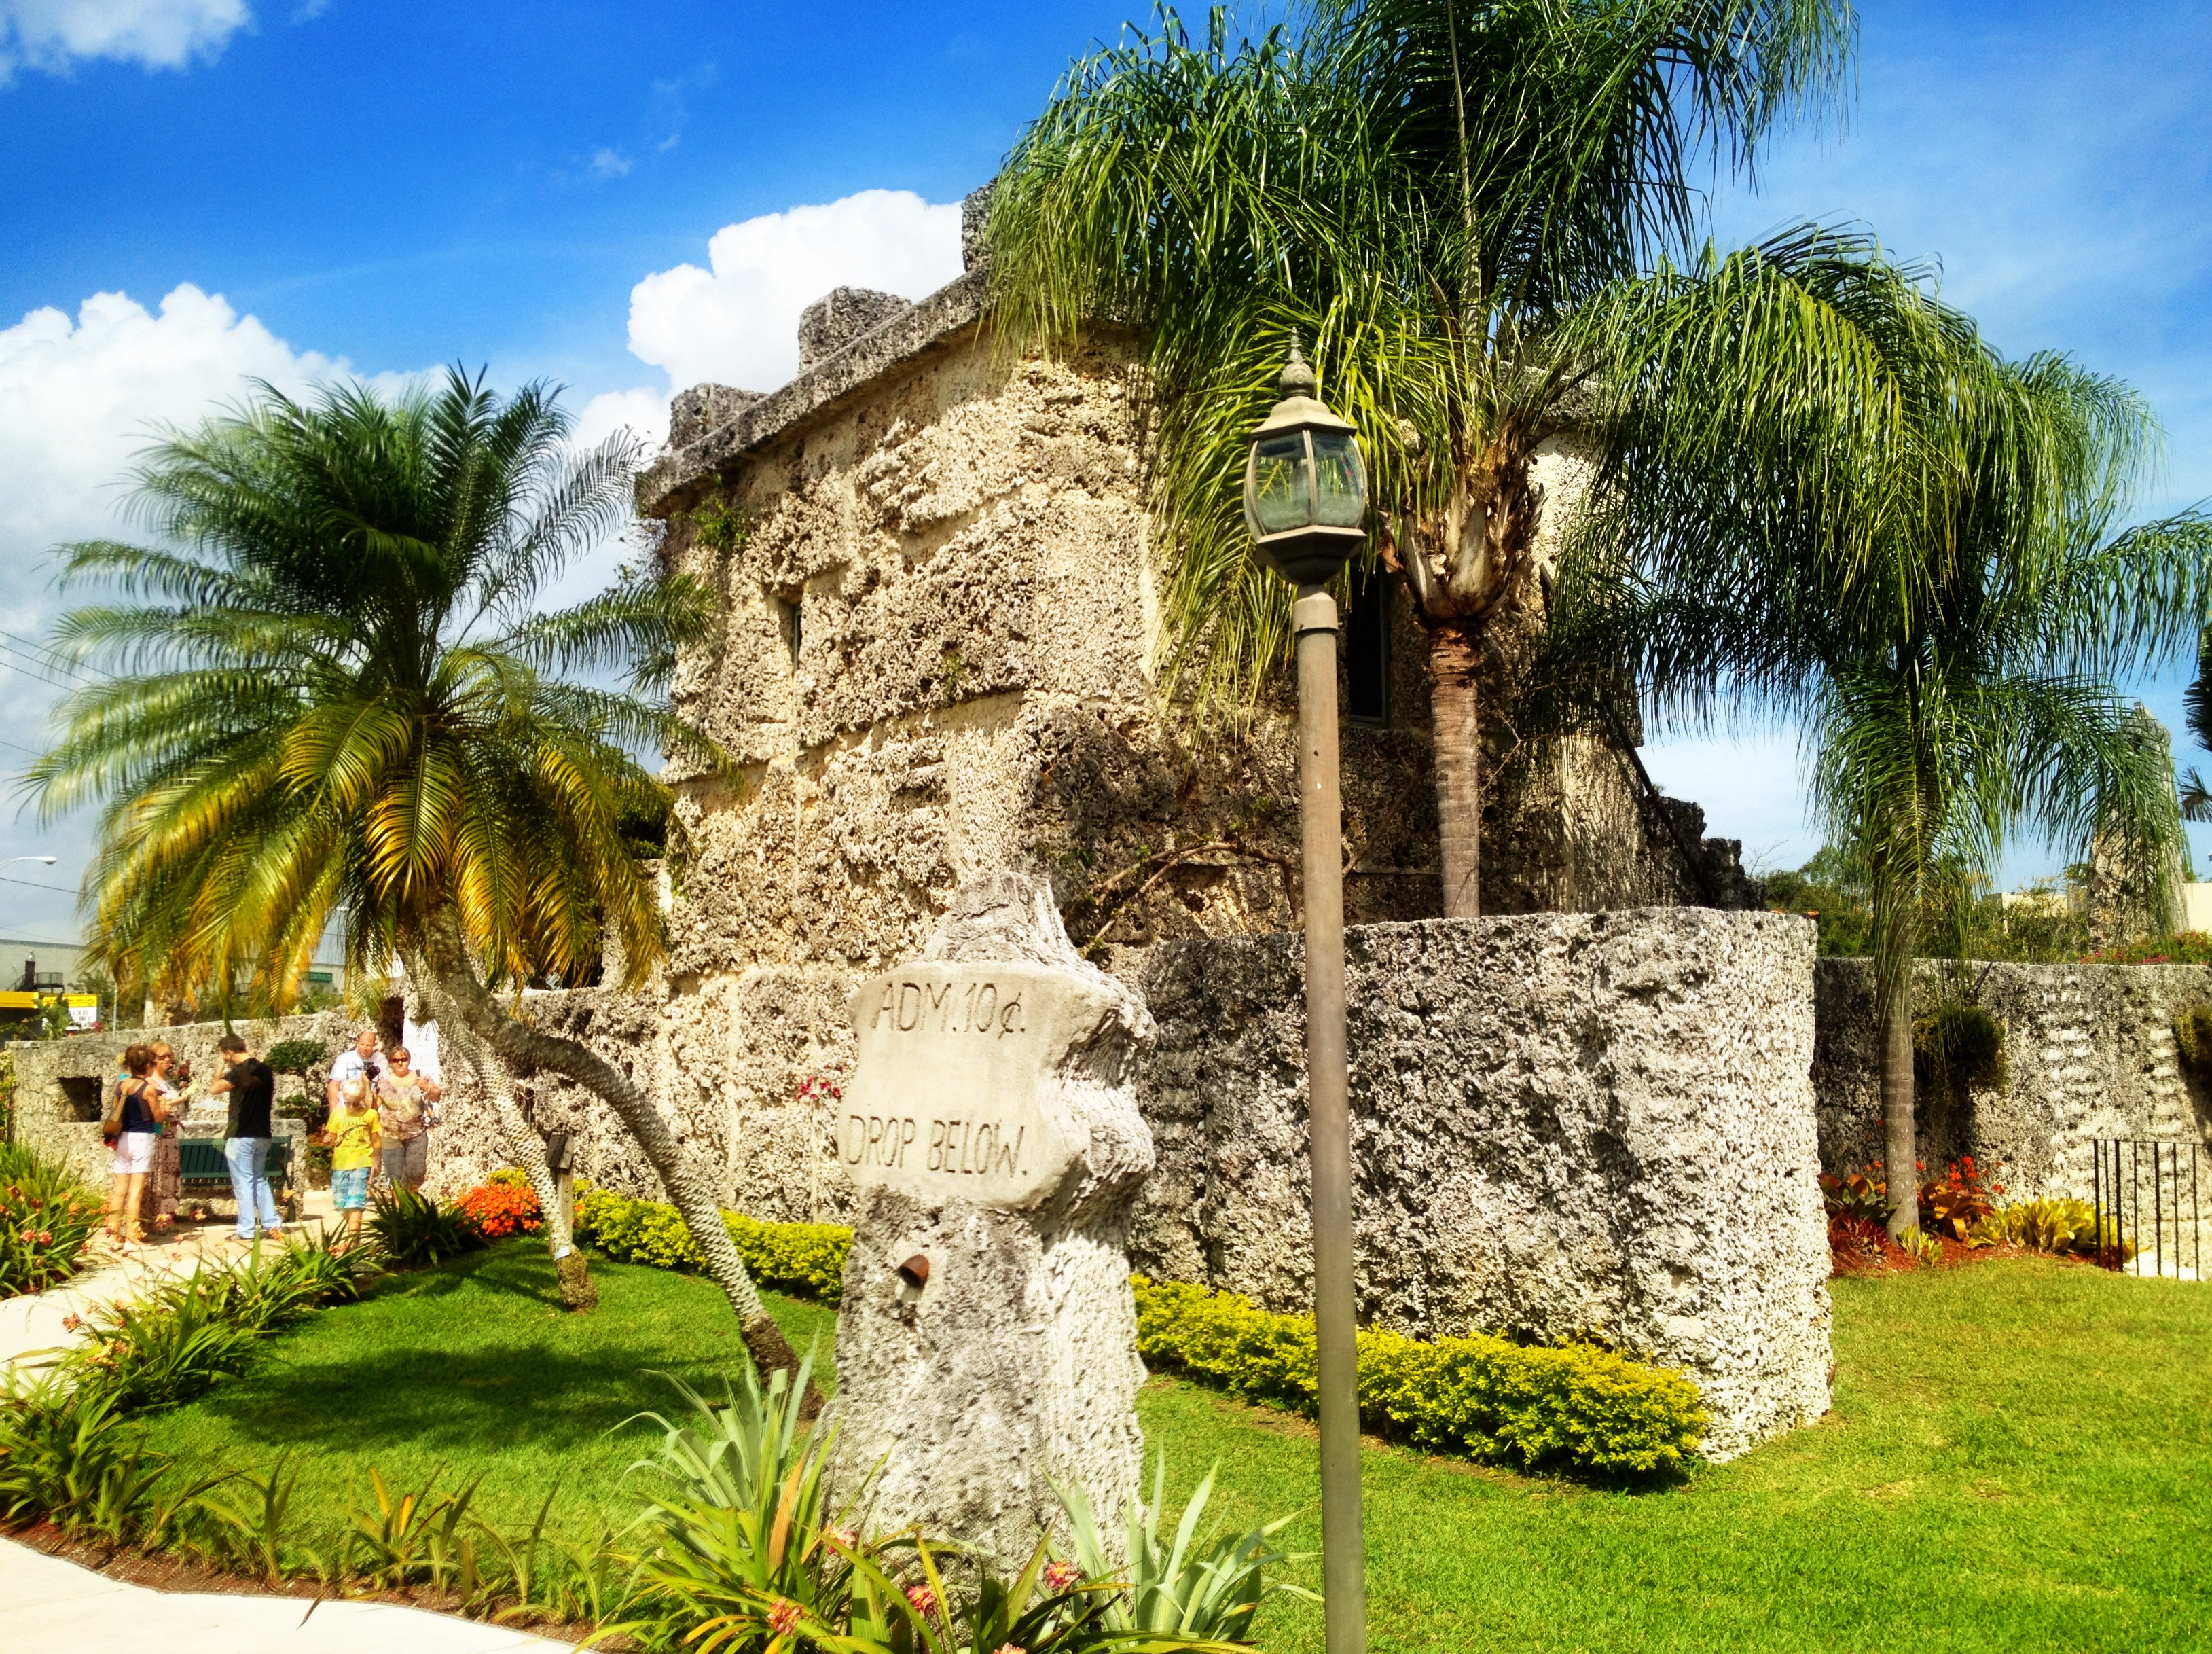 Coral Castle Museum - Homestead, FL.